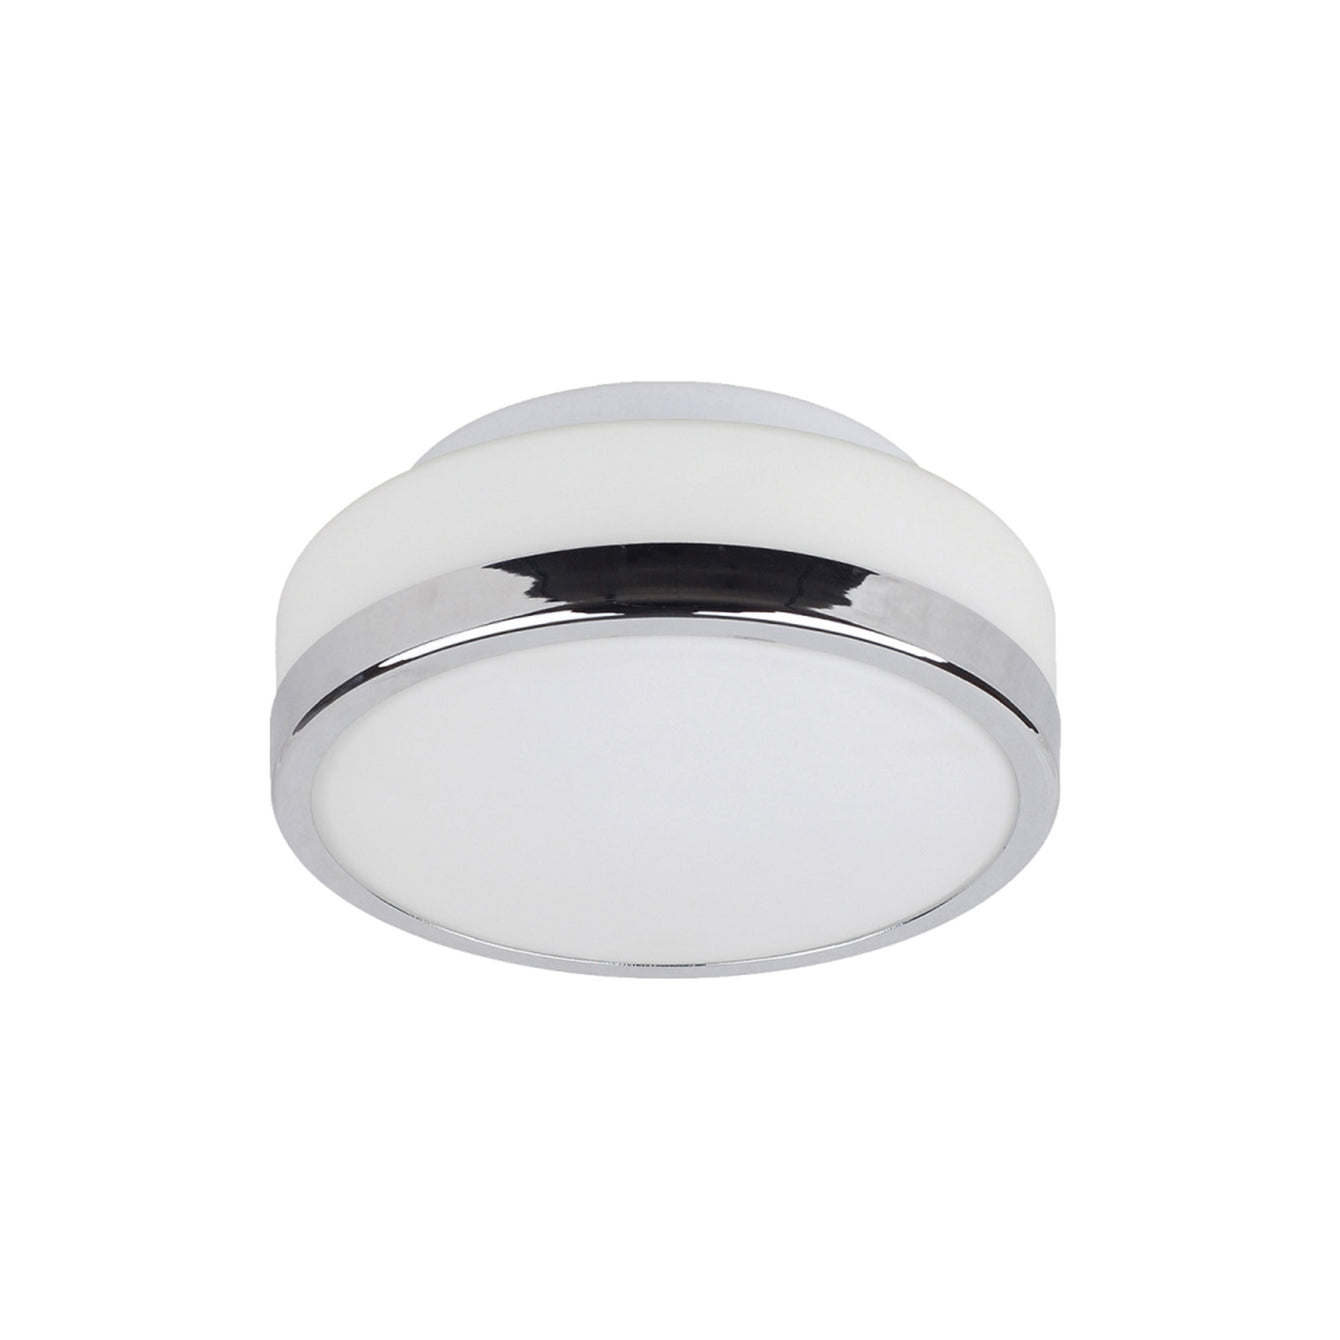 Latimer Small and Large Flush Fitting LED Light - Buy It Better 